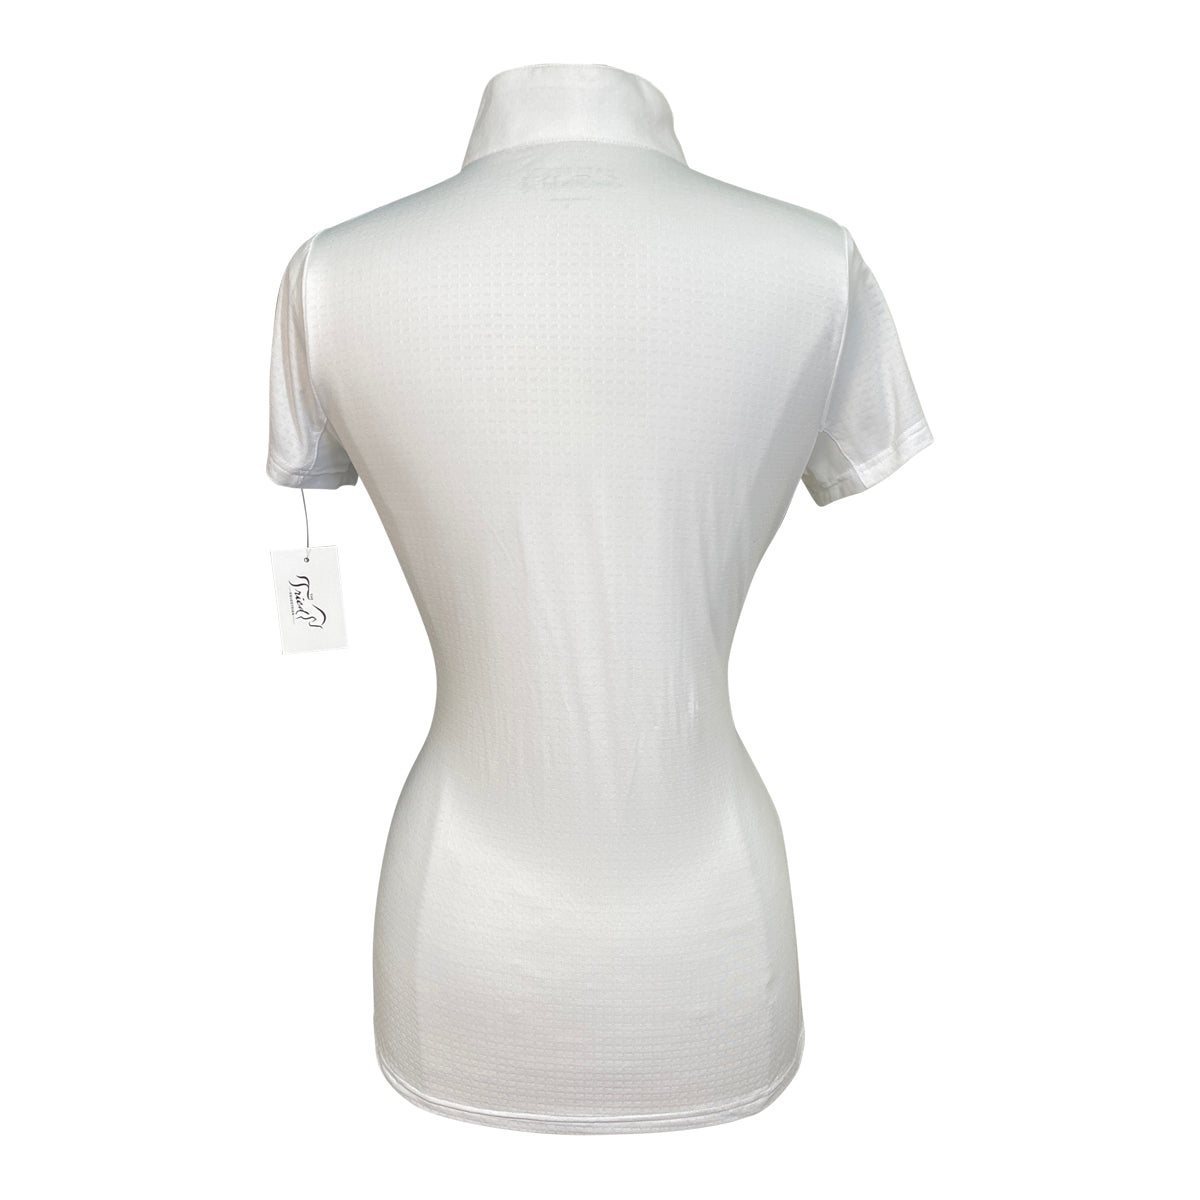 SmartPak Hadley Sunshield 1/4 Zip Short Sleeve Shirt in White